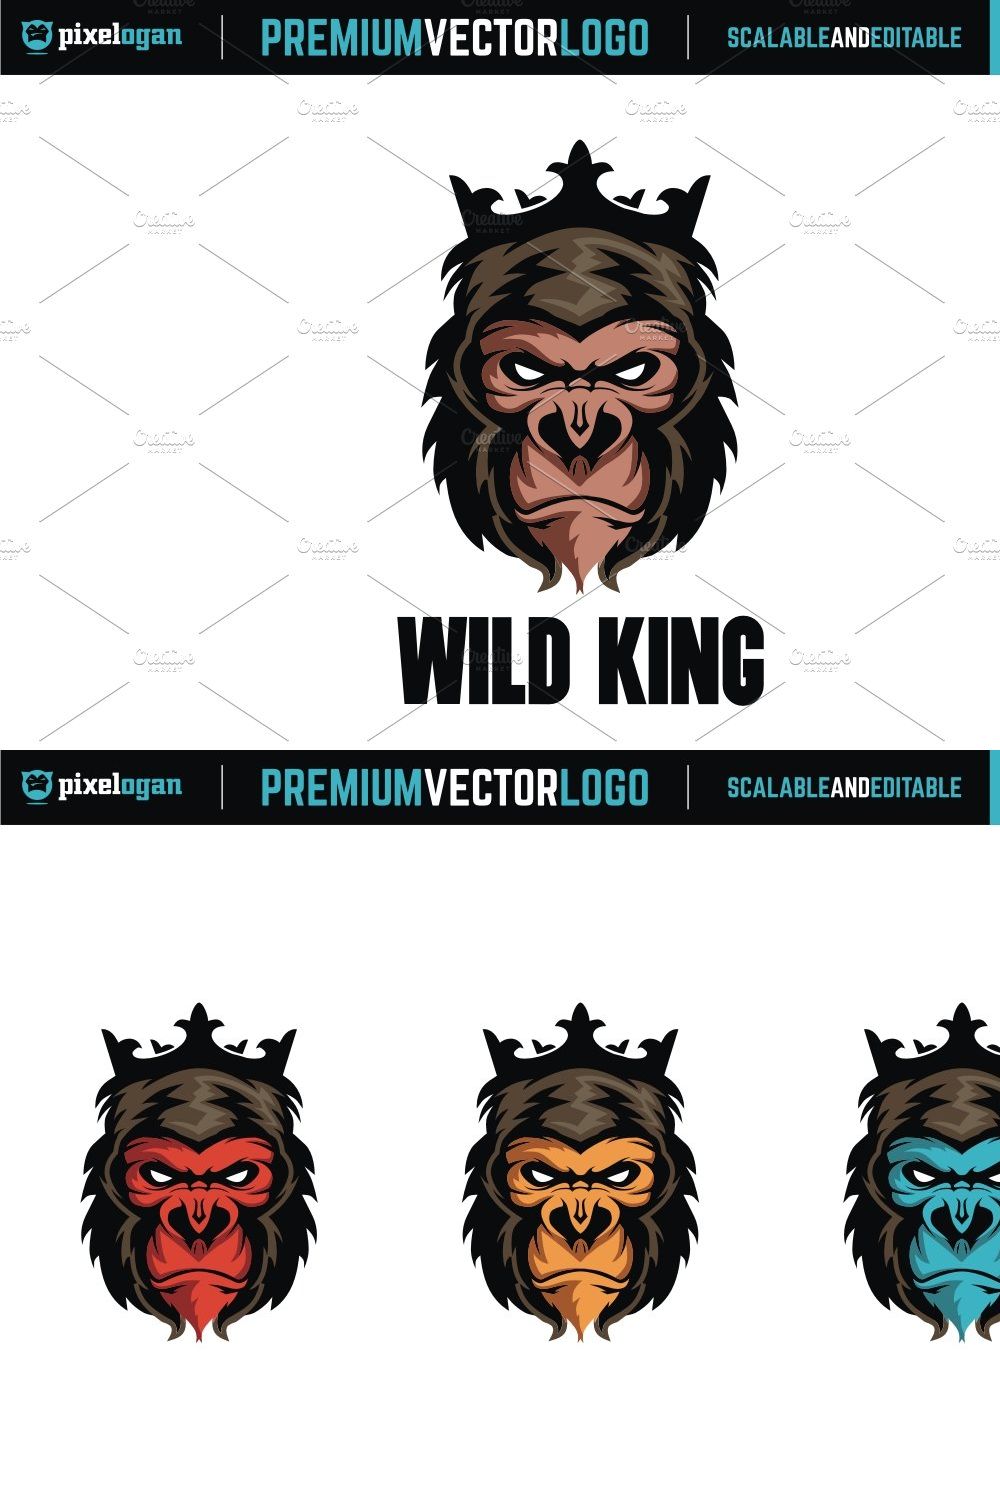 Wild King Logo pinterest preview image.